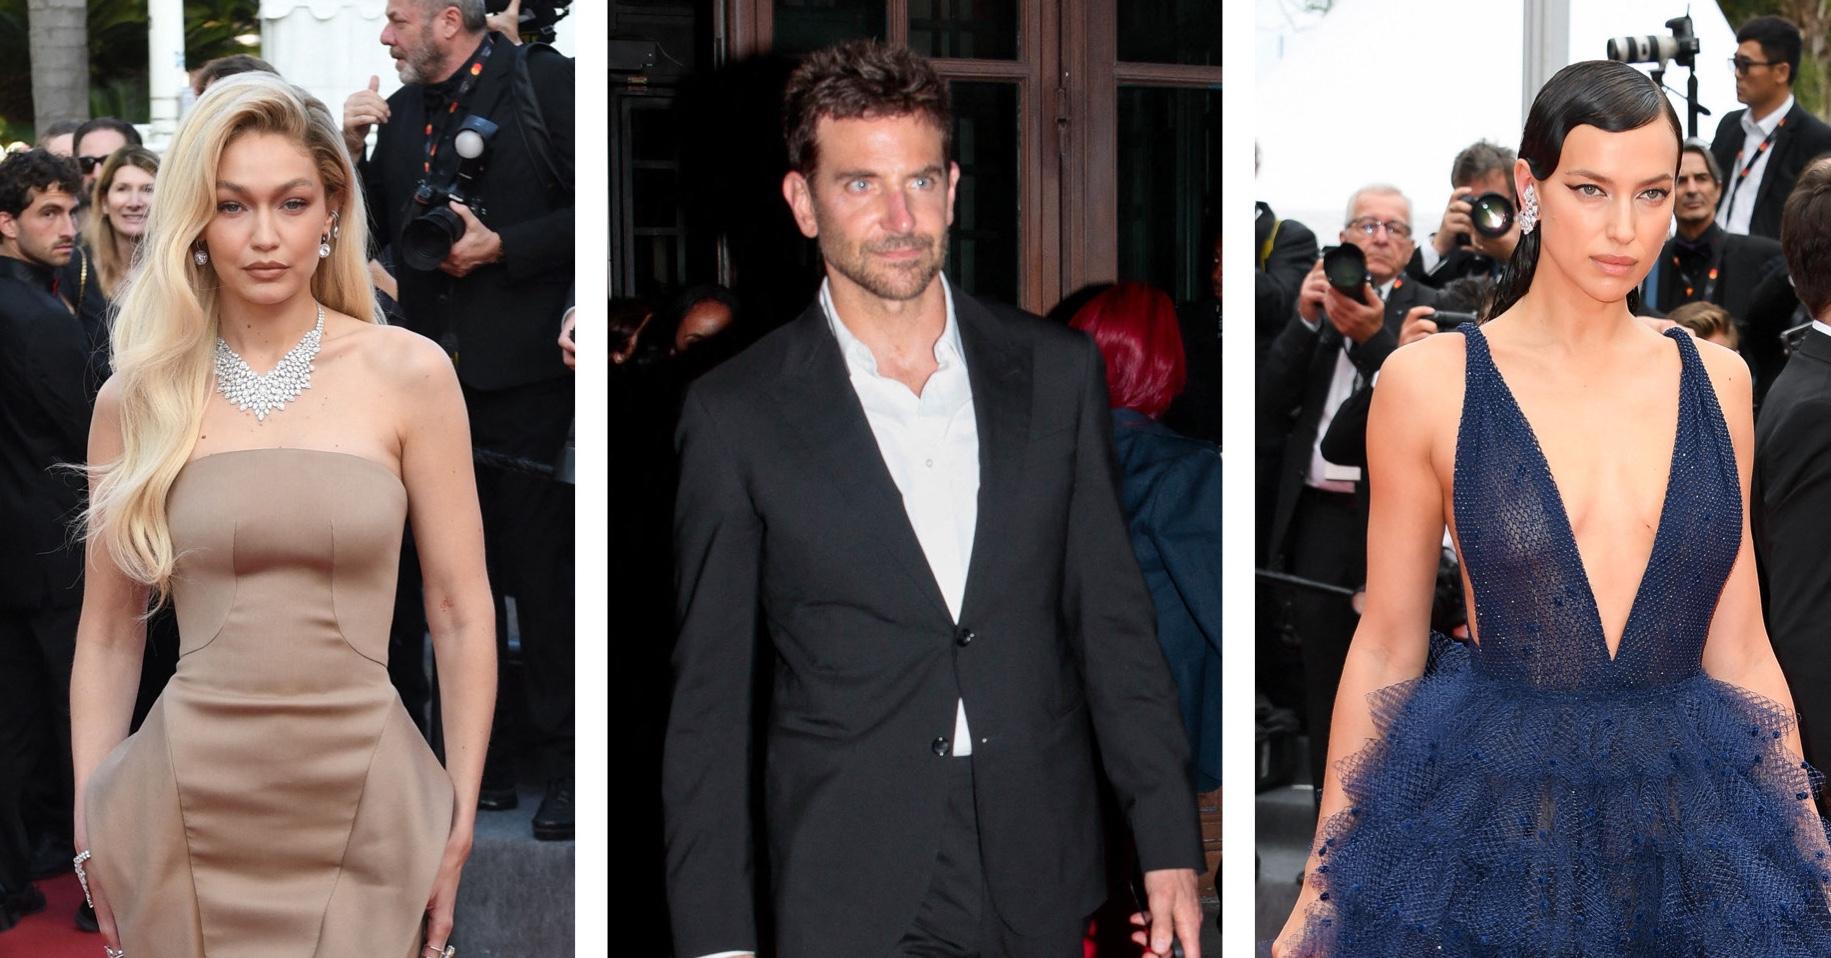 Irina Shayk Reportedly Set Up Gigi Hadid and Bradley Cooper